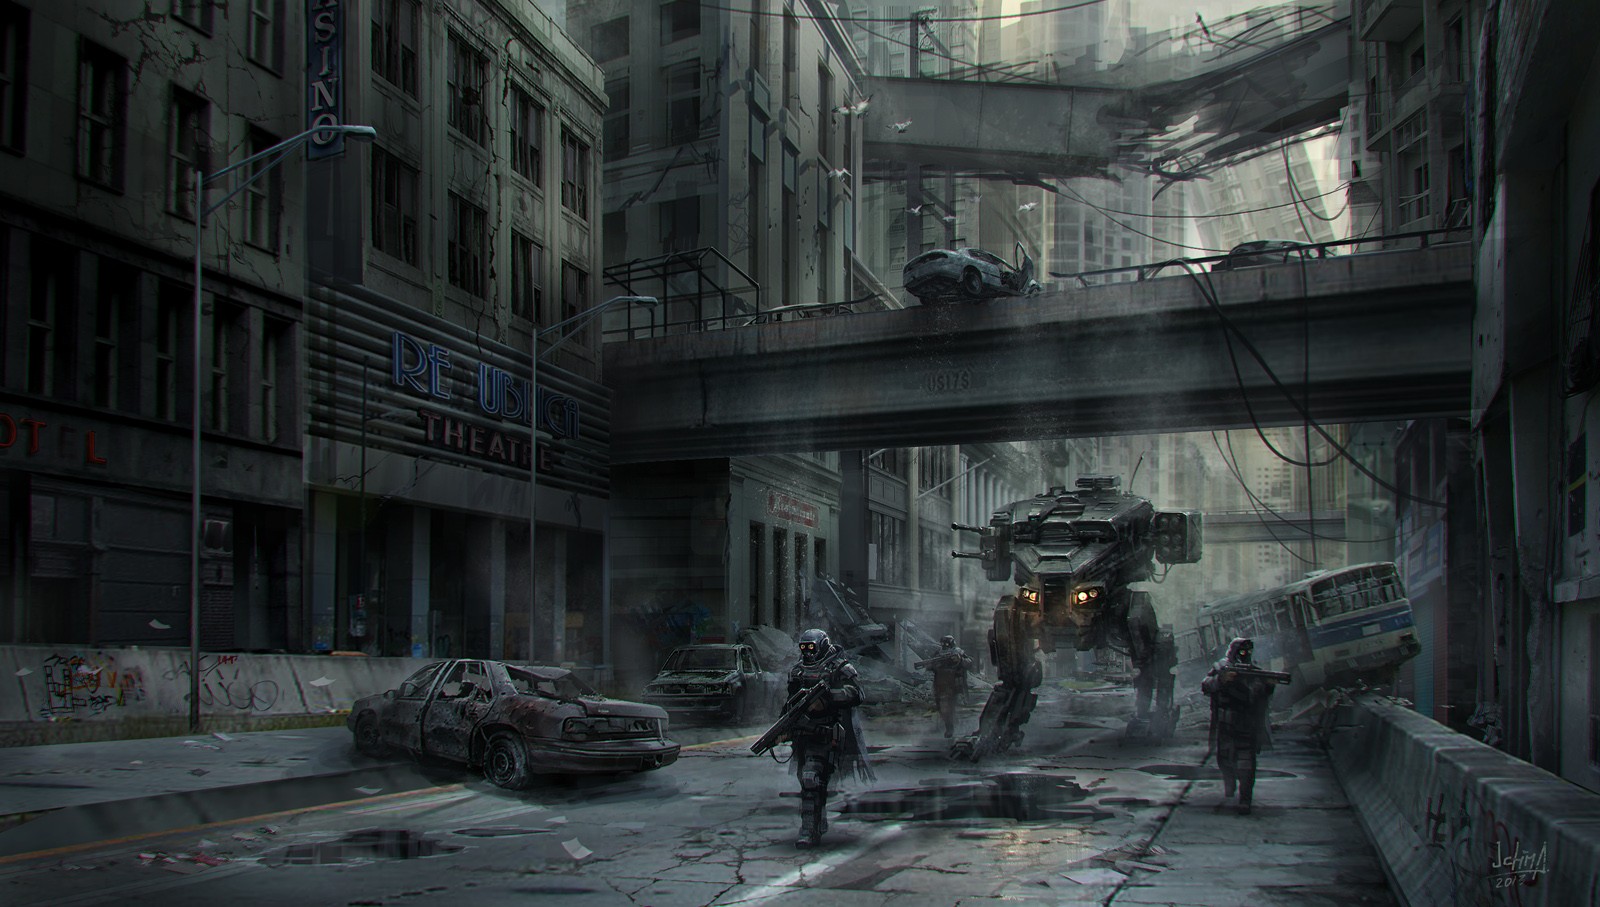 General 1600x907 artwork mechs futuristic dark Alex Ichim science fiction city cityscape